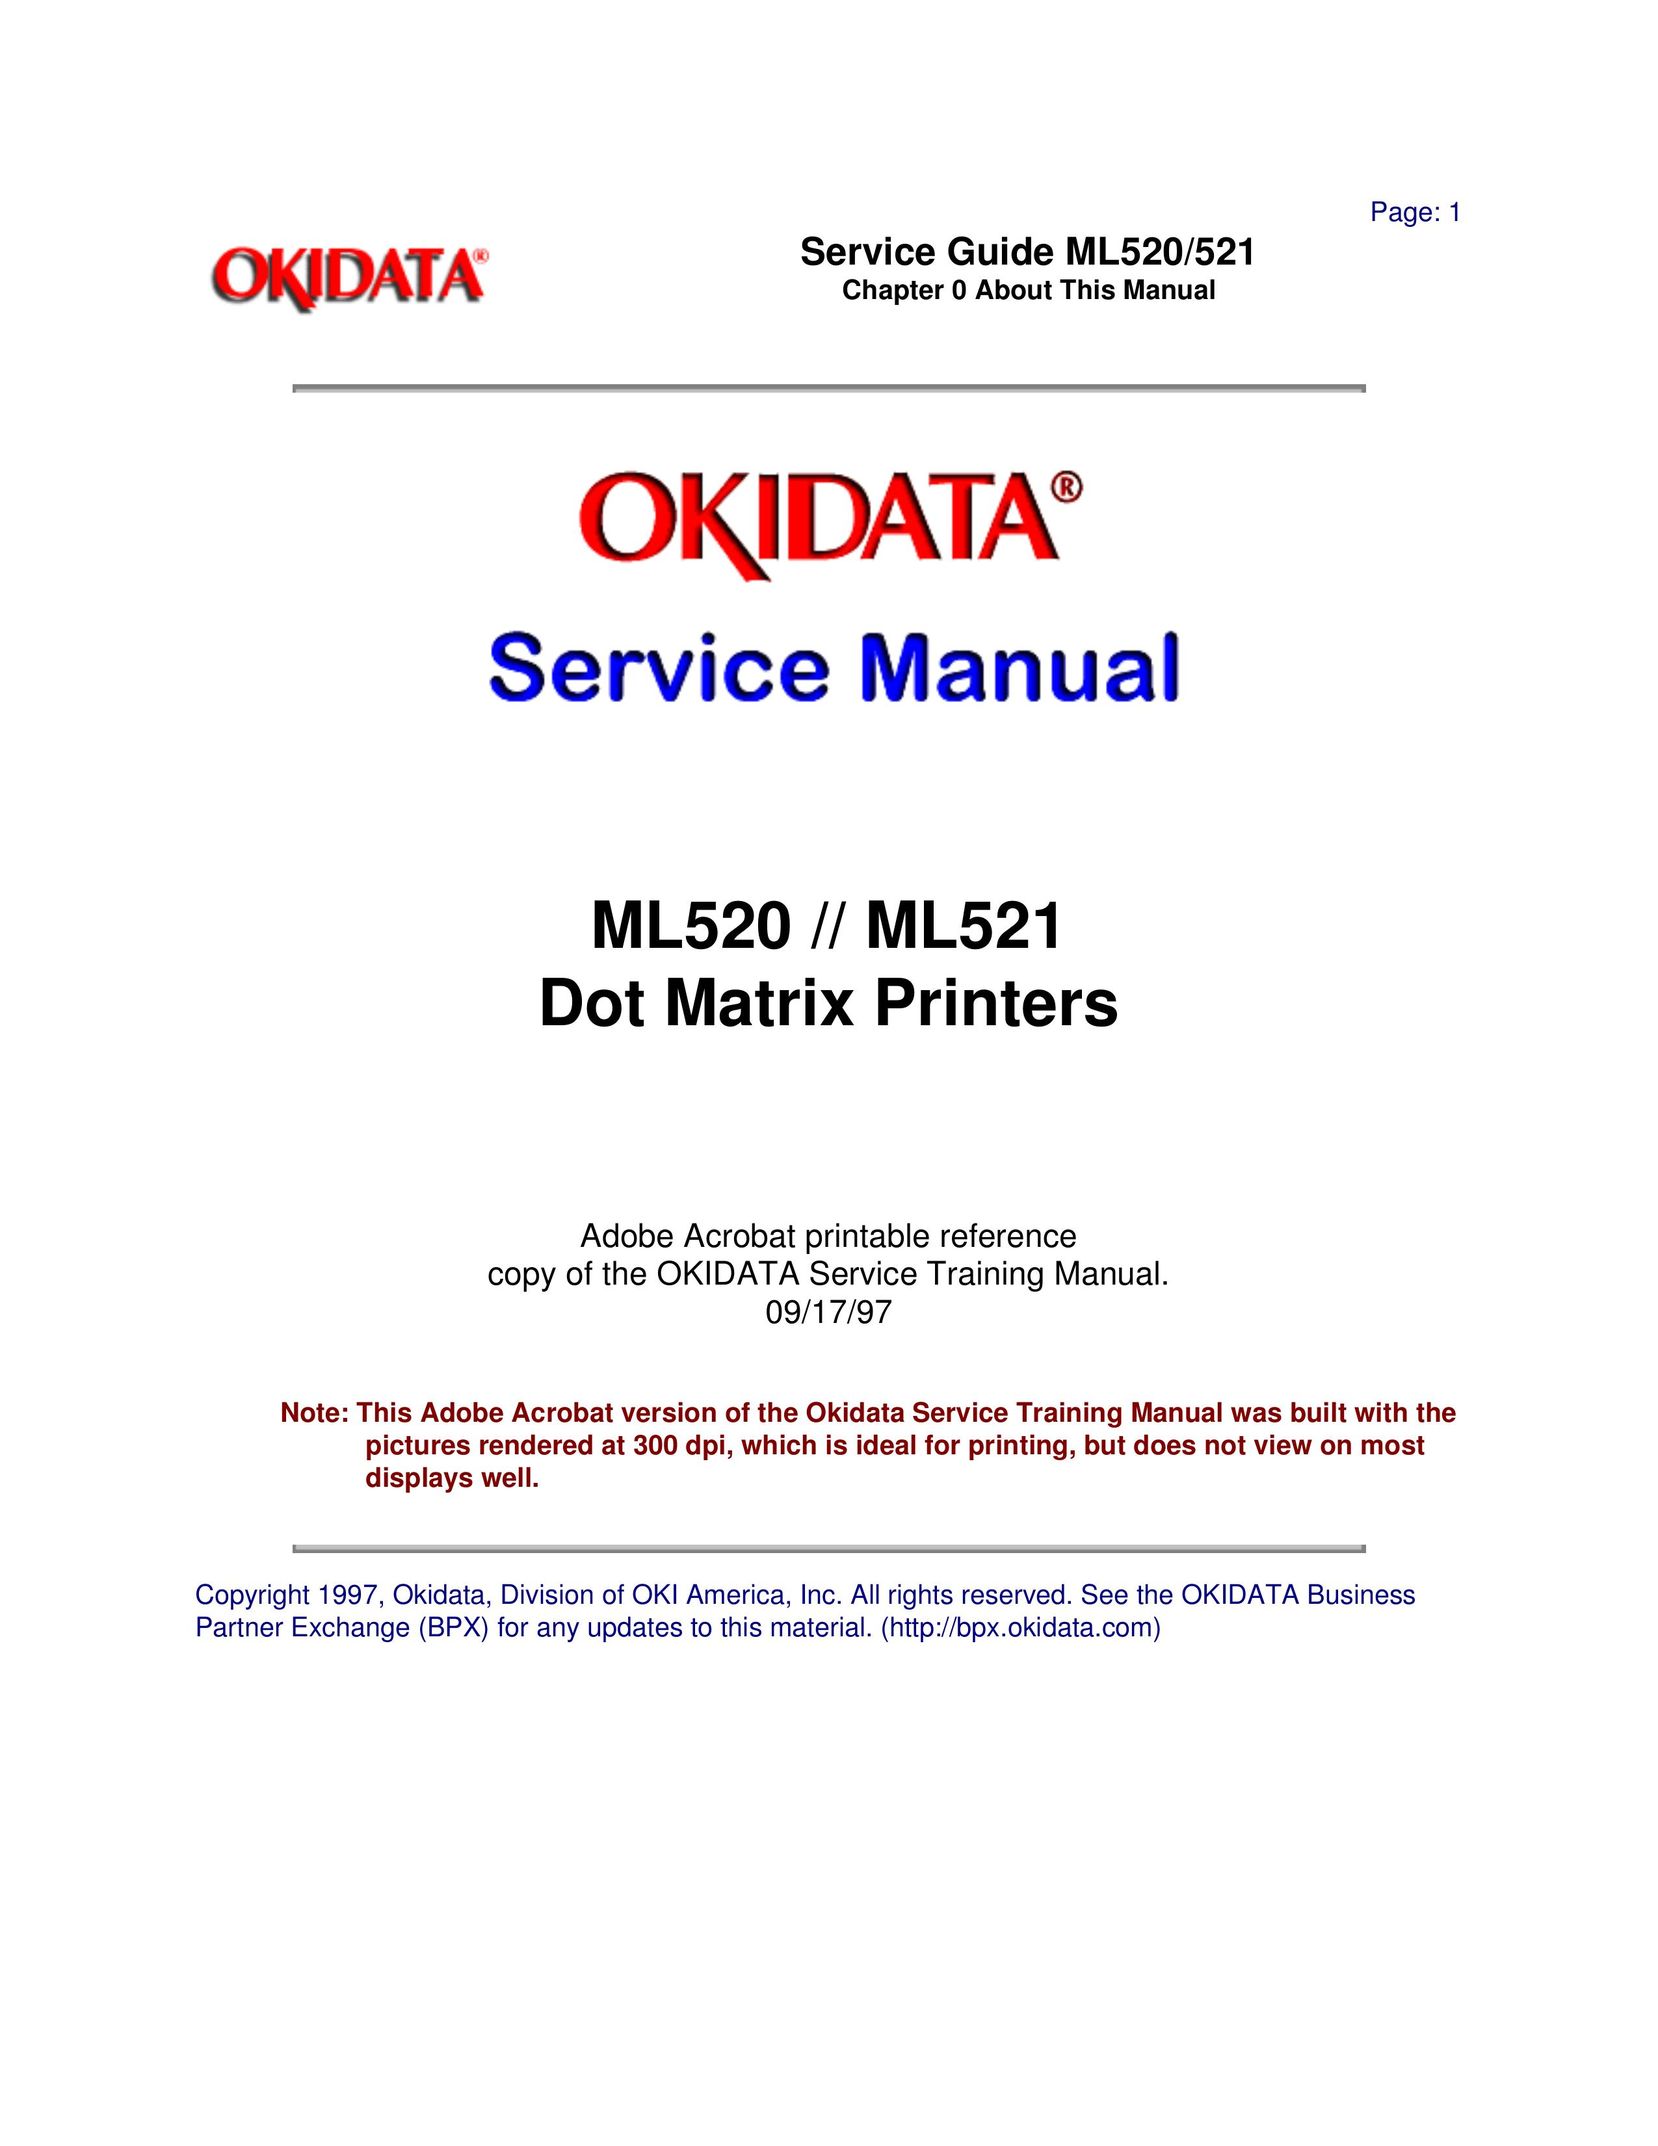 Oki ML521 Fax Machine User Manual